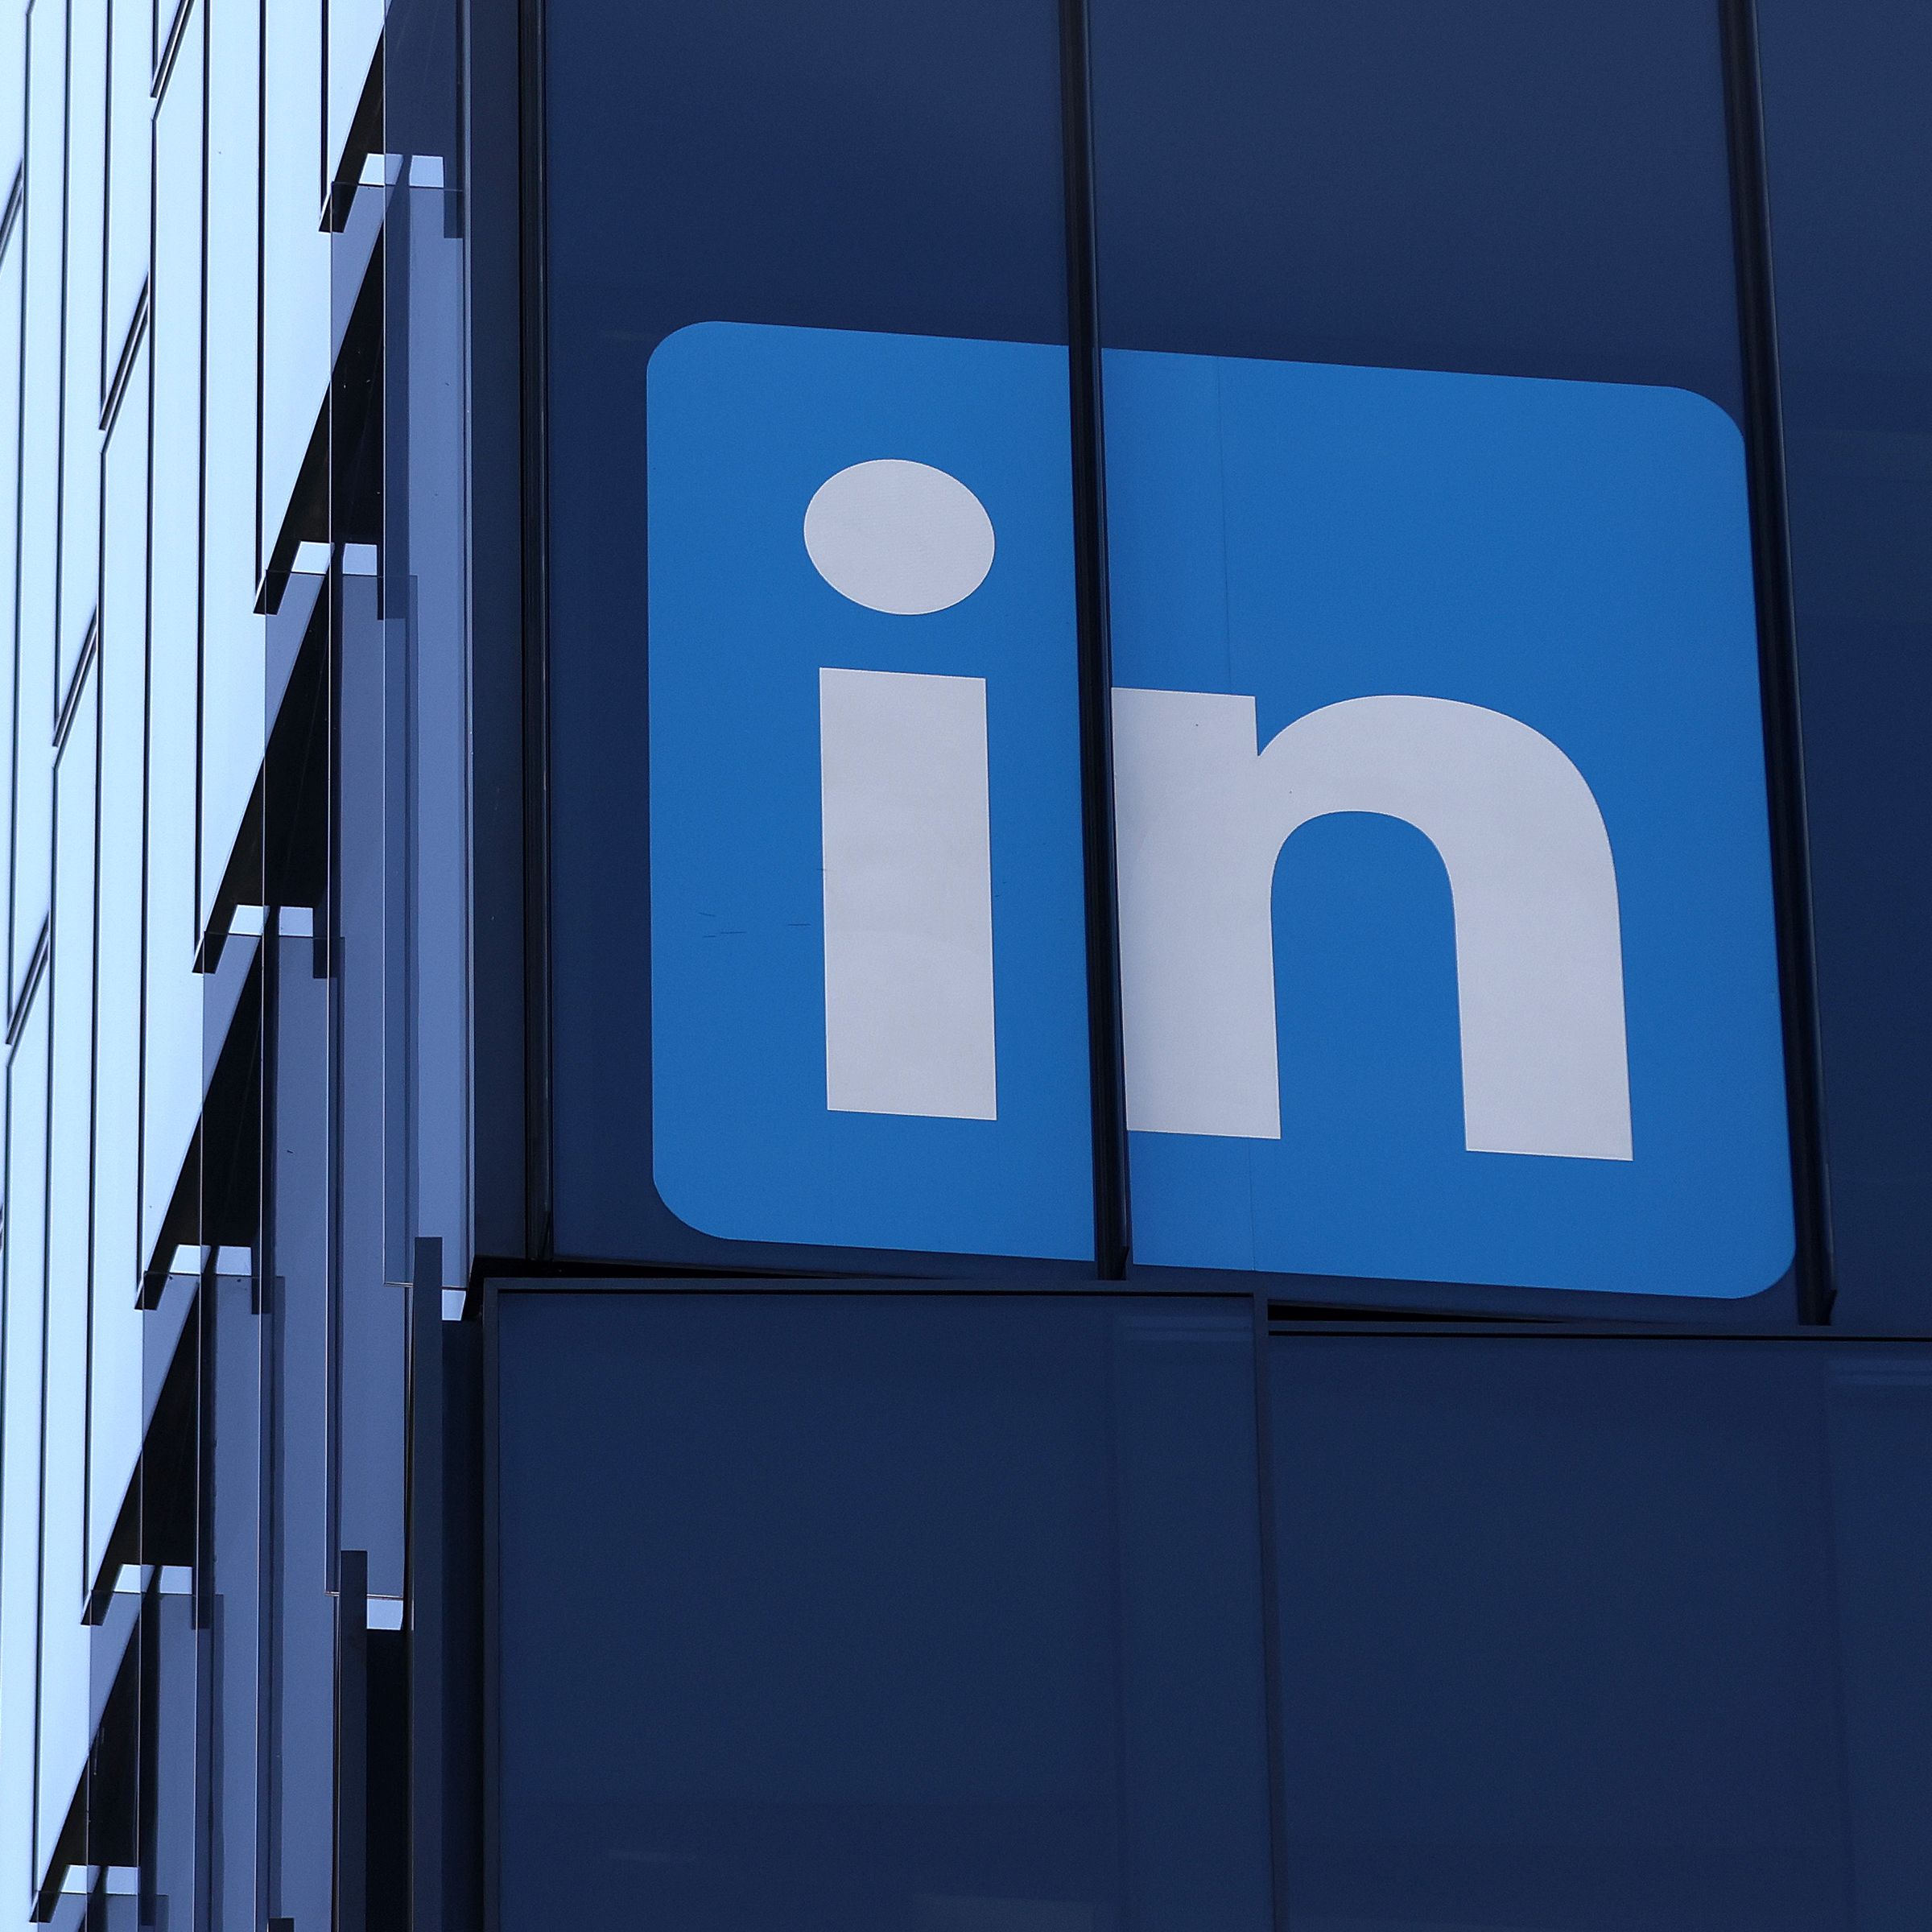 LinkedIn logo on side of a building